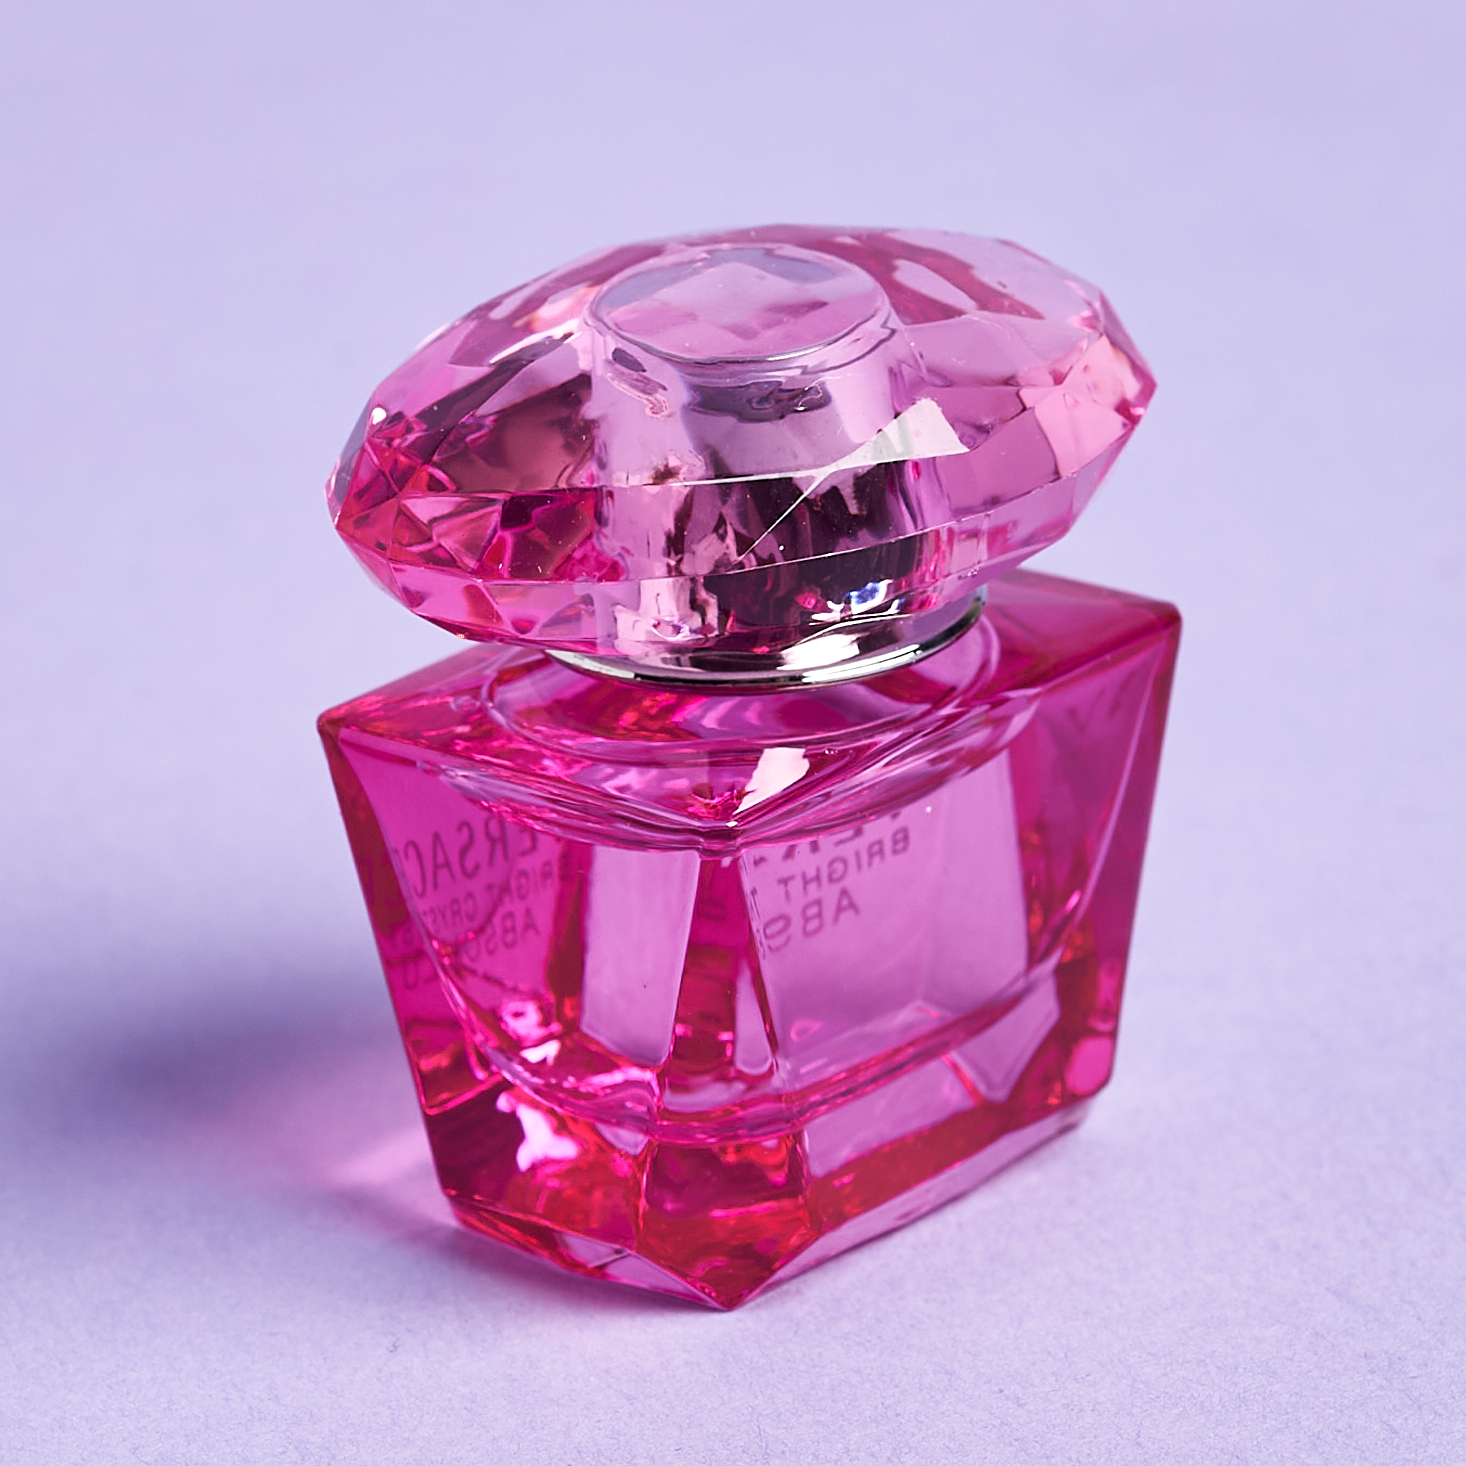 Sephora Favorites Perfume Review - February 2020